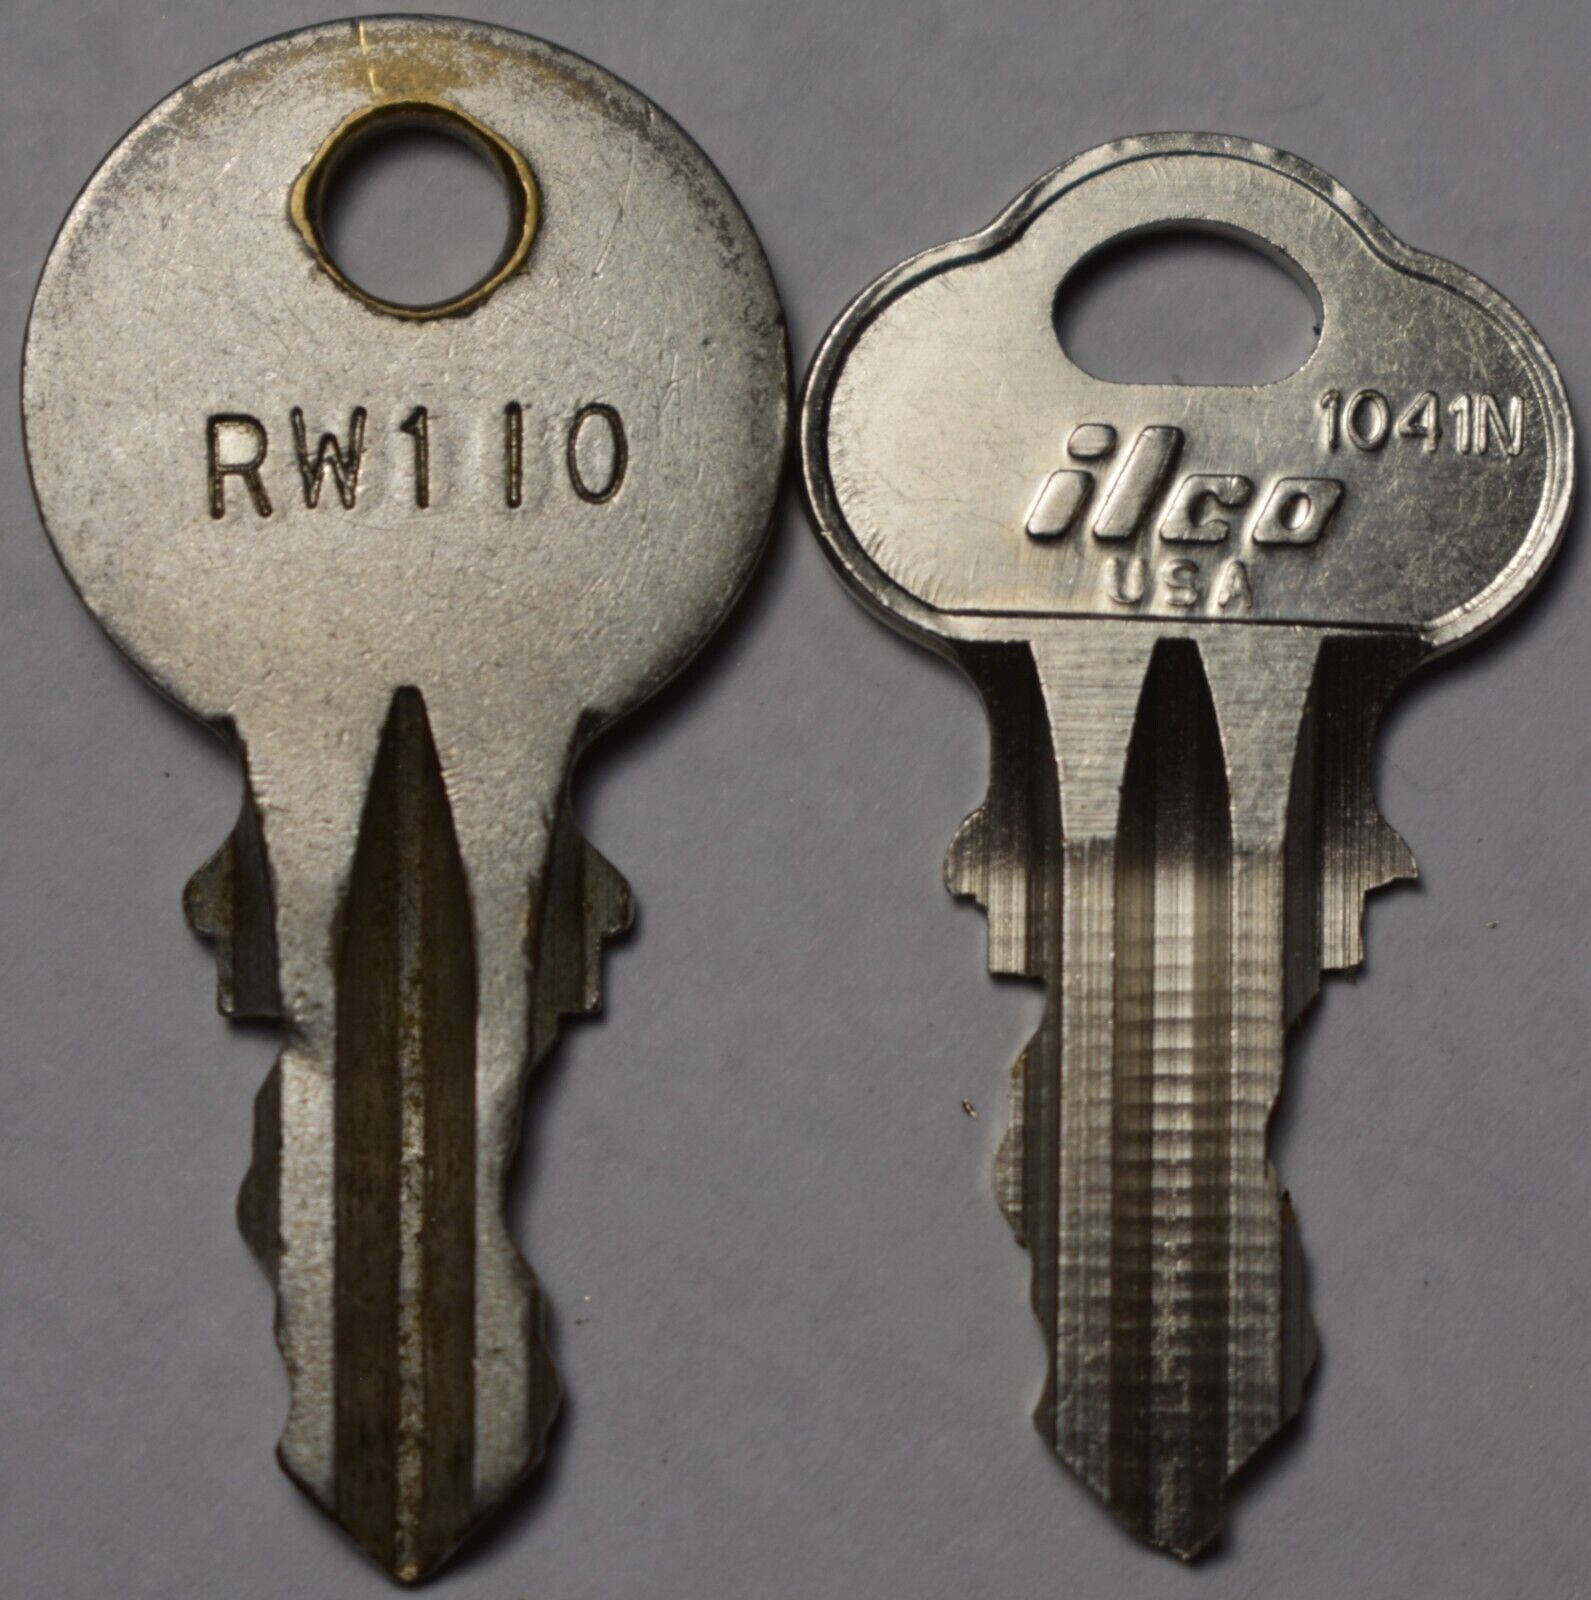 *NEW* Wurlitzer RW110 Cabinet Key For Models 3500, 3600, 3700, 3800, 7500 & 1050